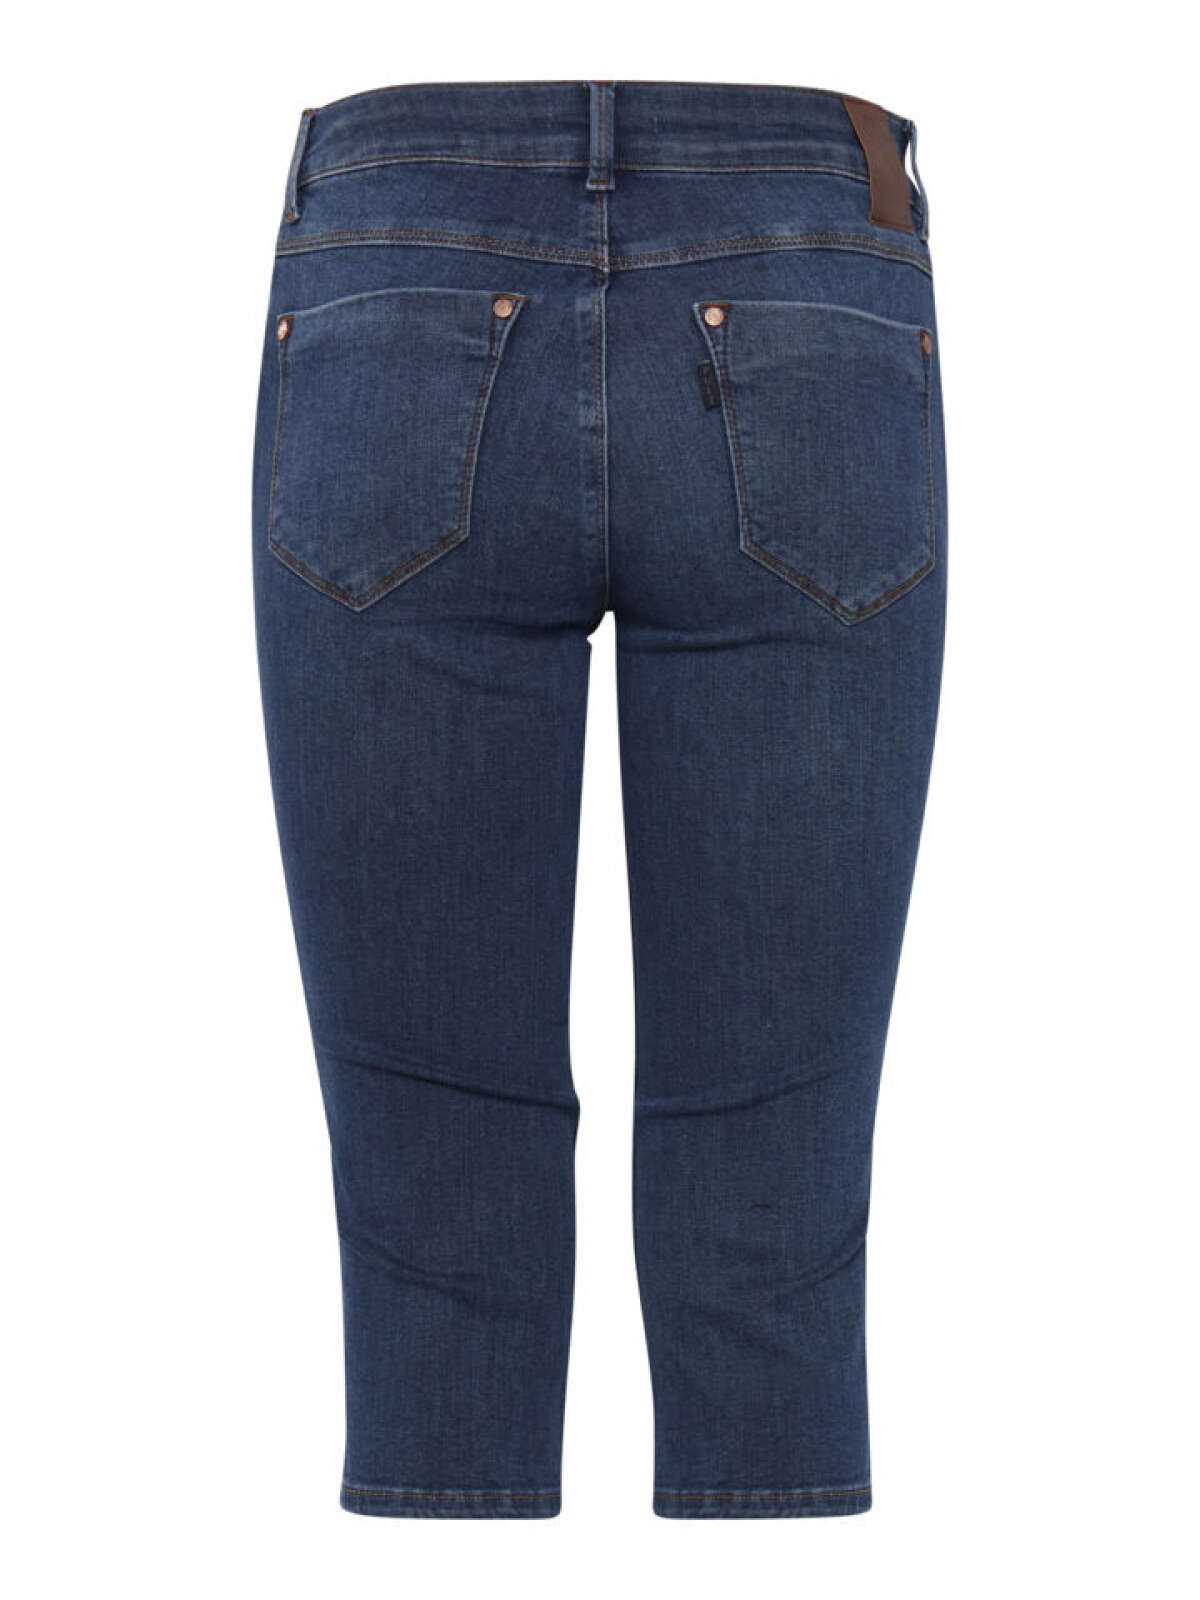 visuel Accepteret papir Emma capri bukser | Pulz Jeans | Shop her > Gundtoft.dk